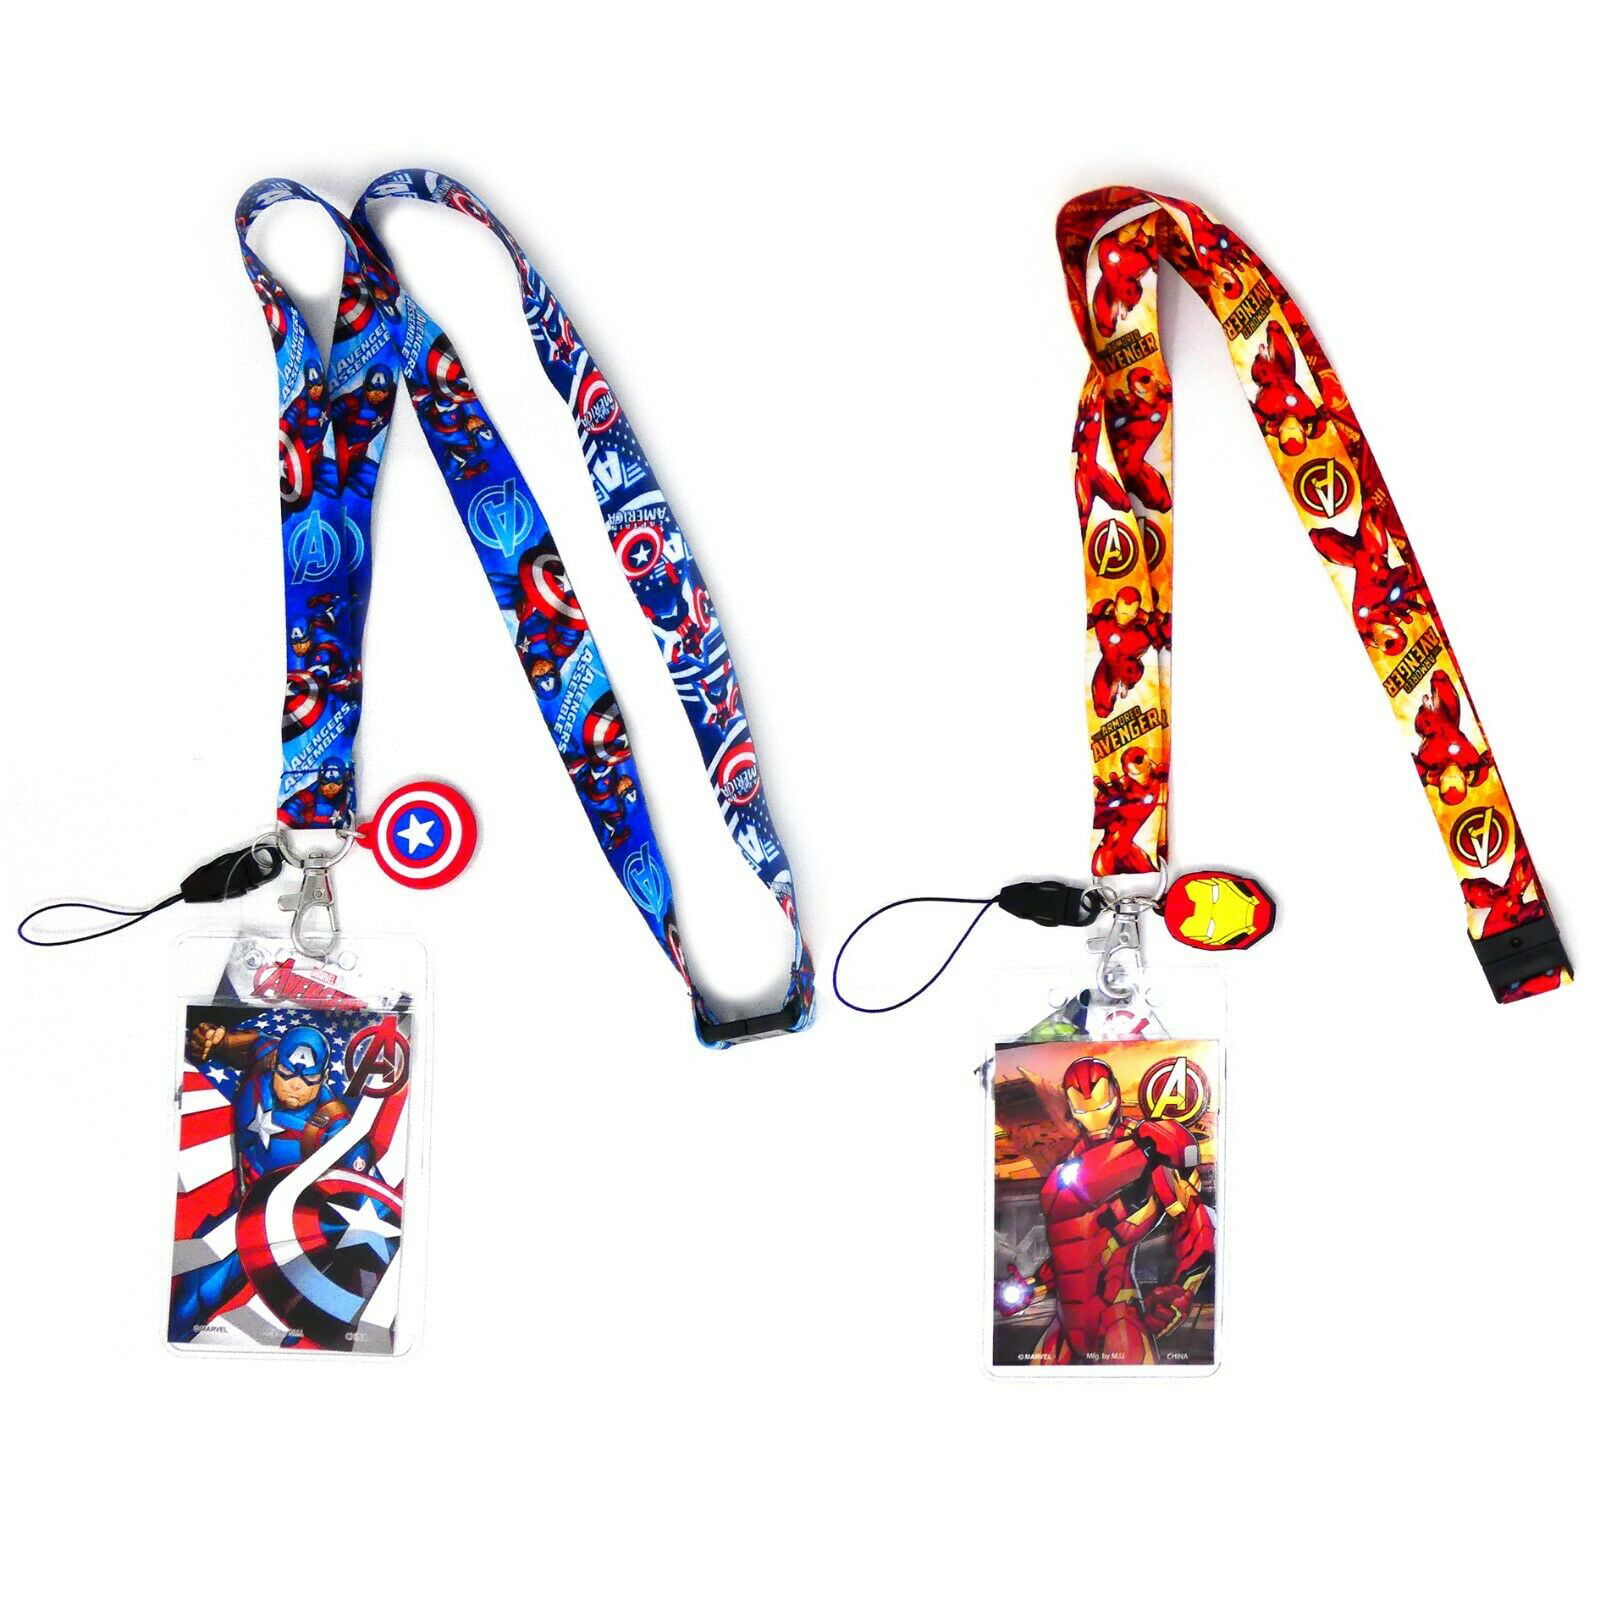 IRON MAN Lanyard Neck Strap Keychain ID Badge Holder Marvel comics avengers